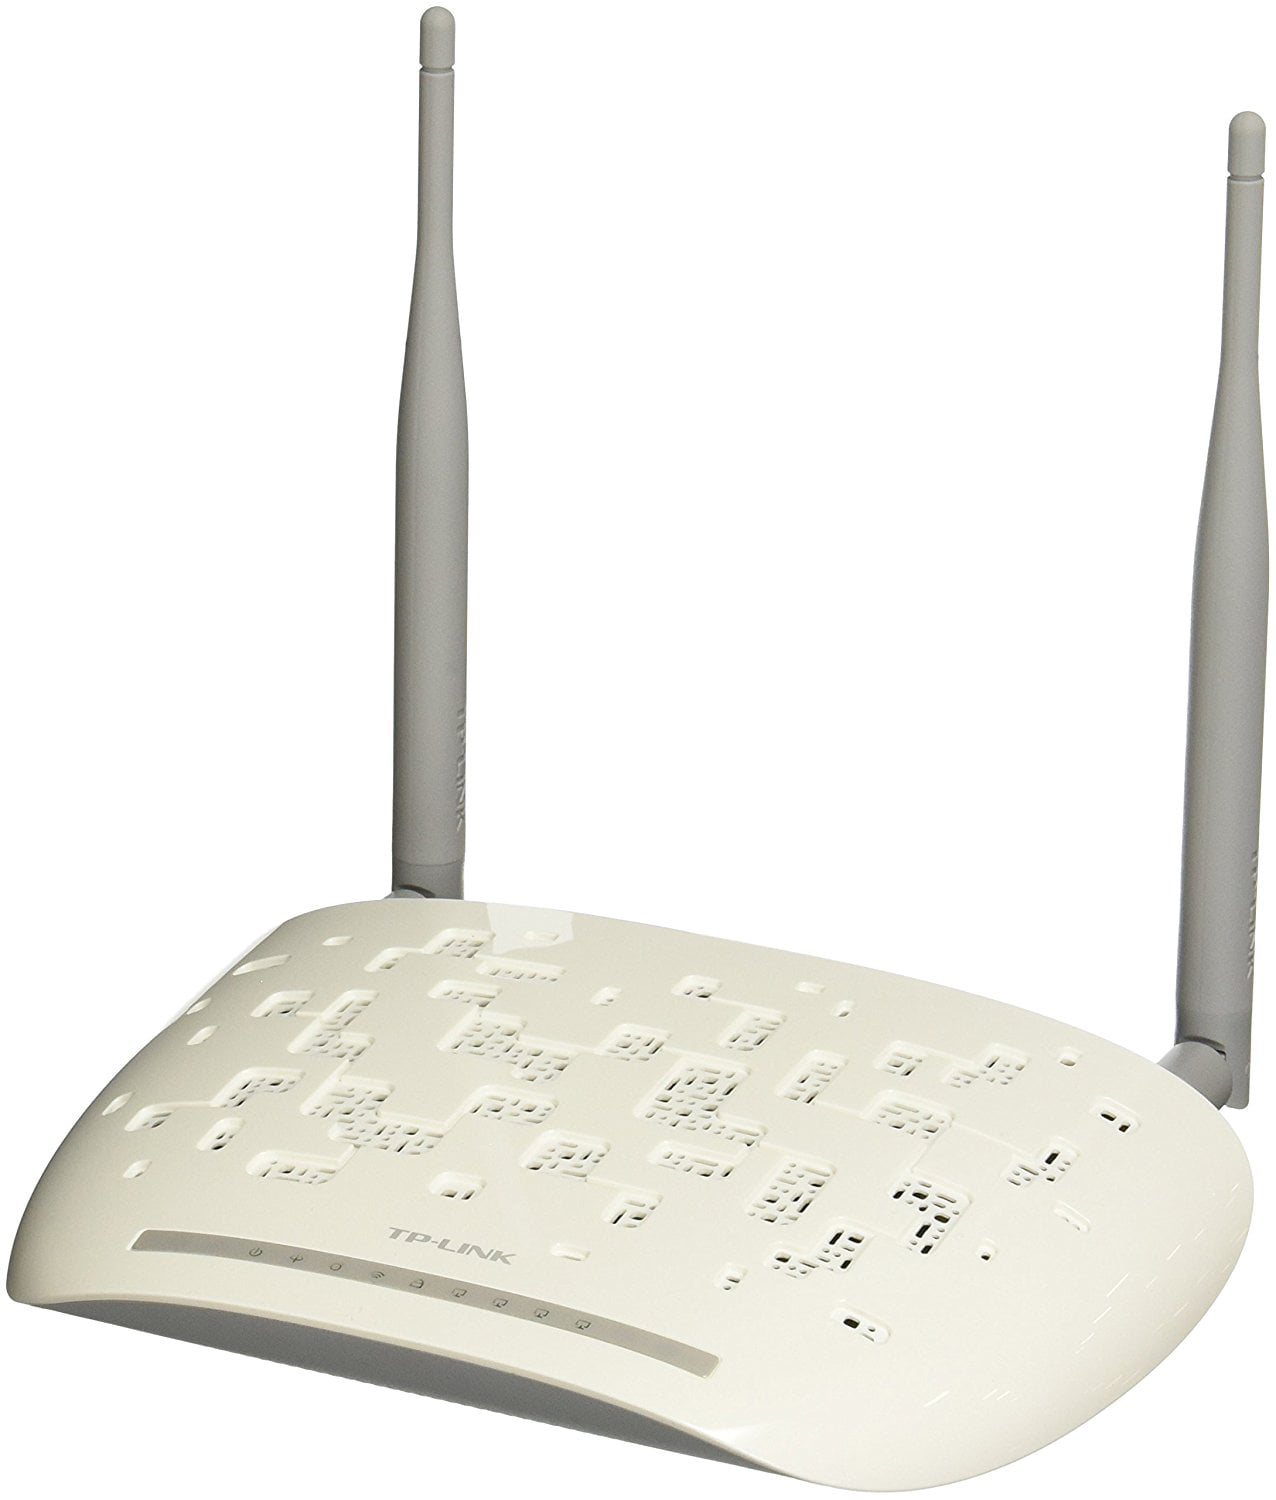 TD-W8961ND Wireless Wi-Fi Modem Router TP-Link N300 ADSL2 